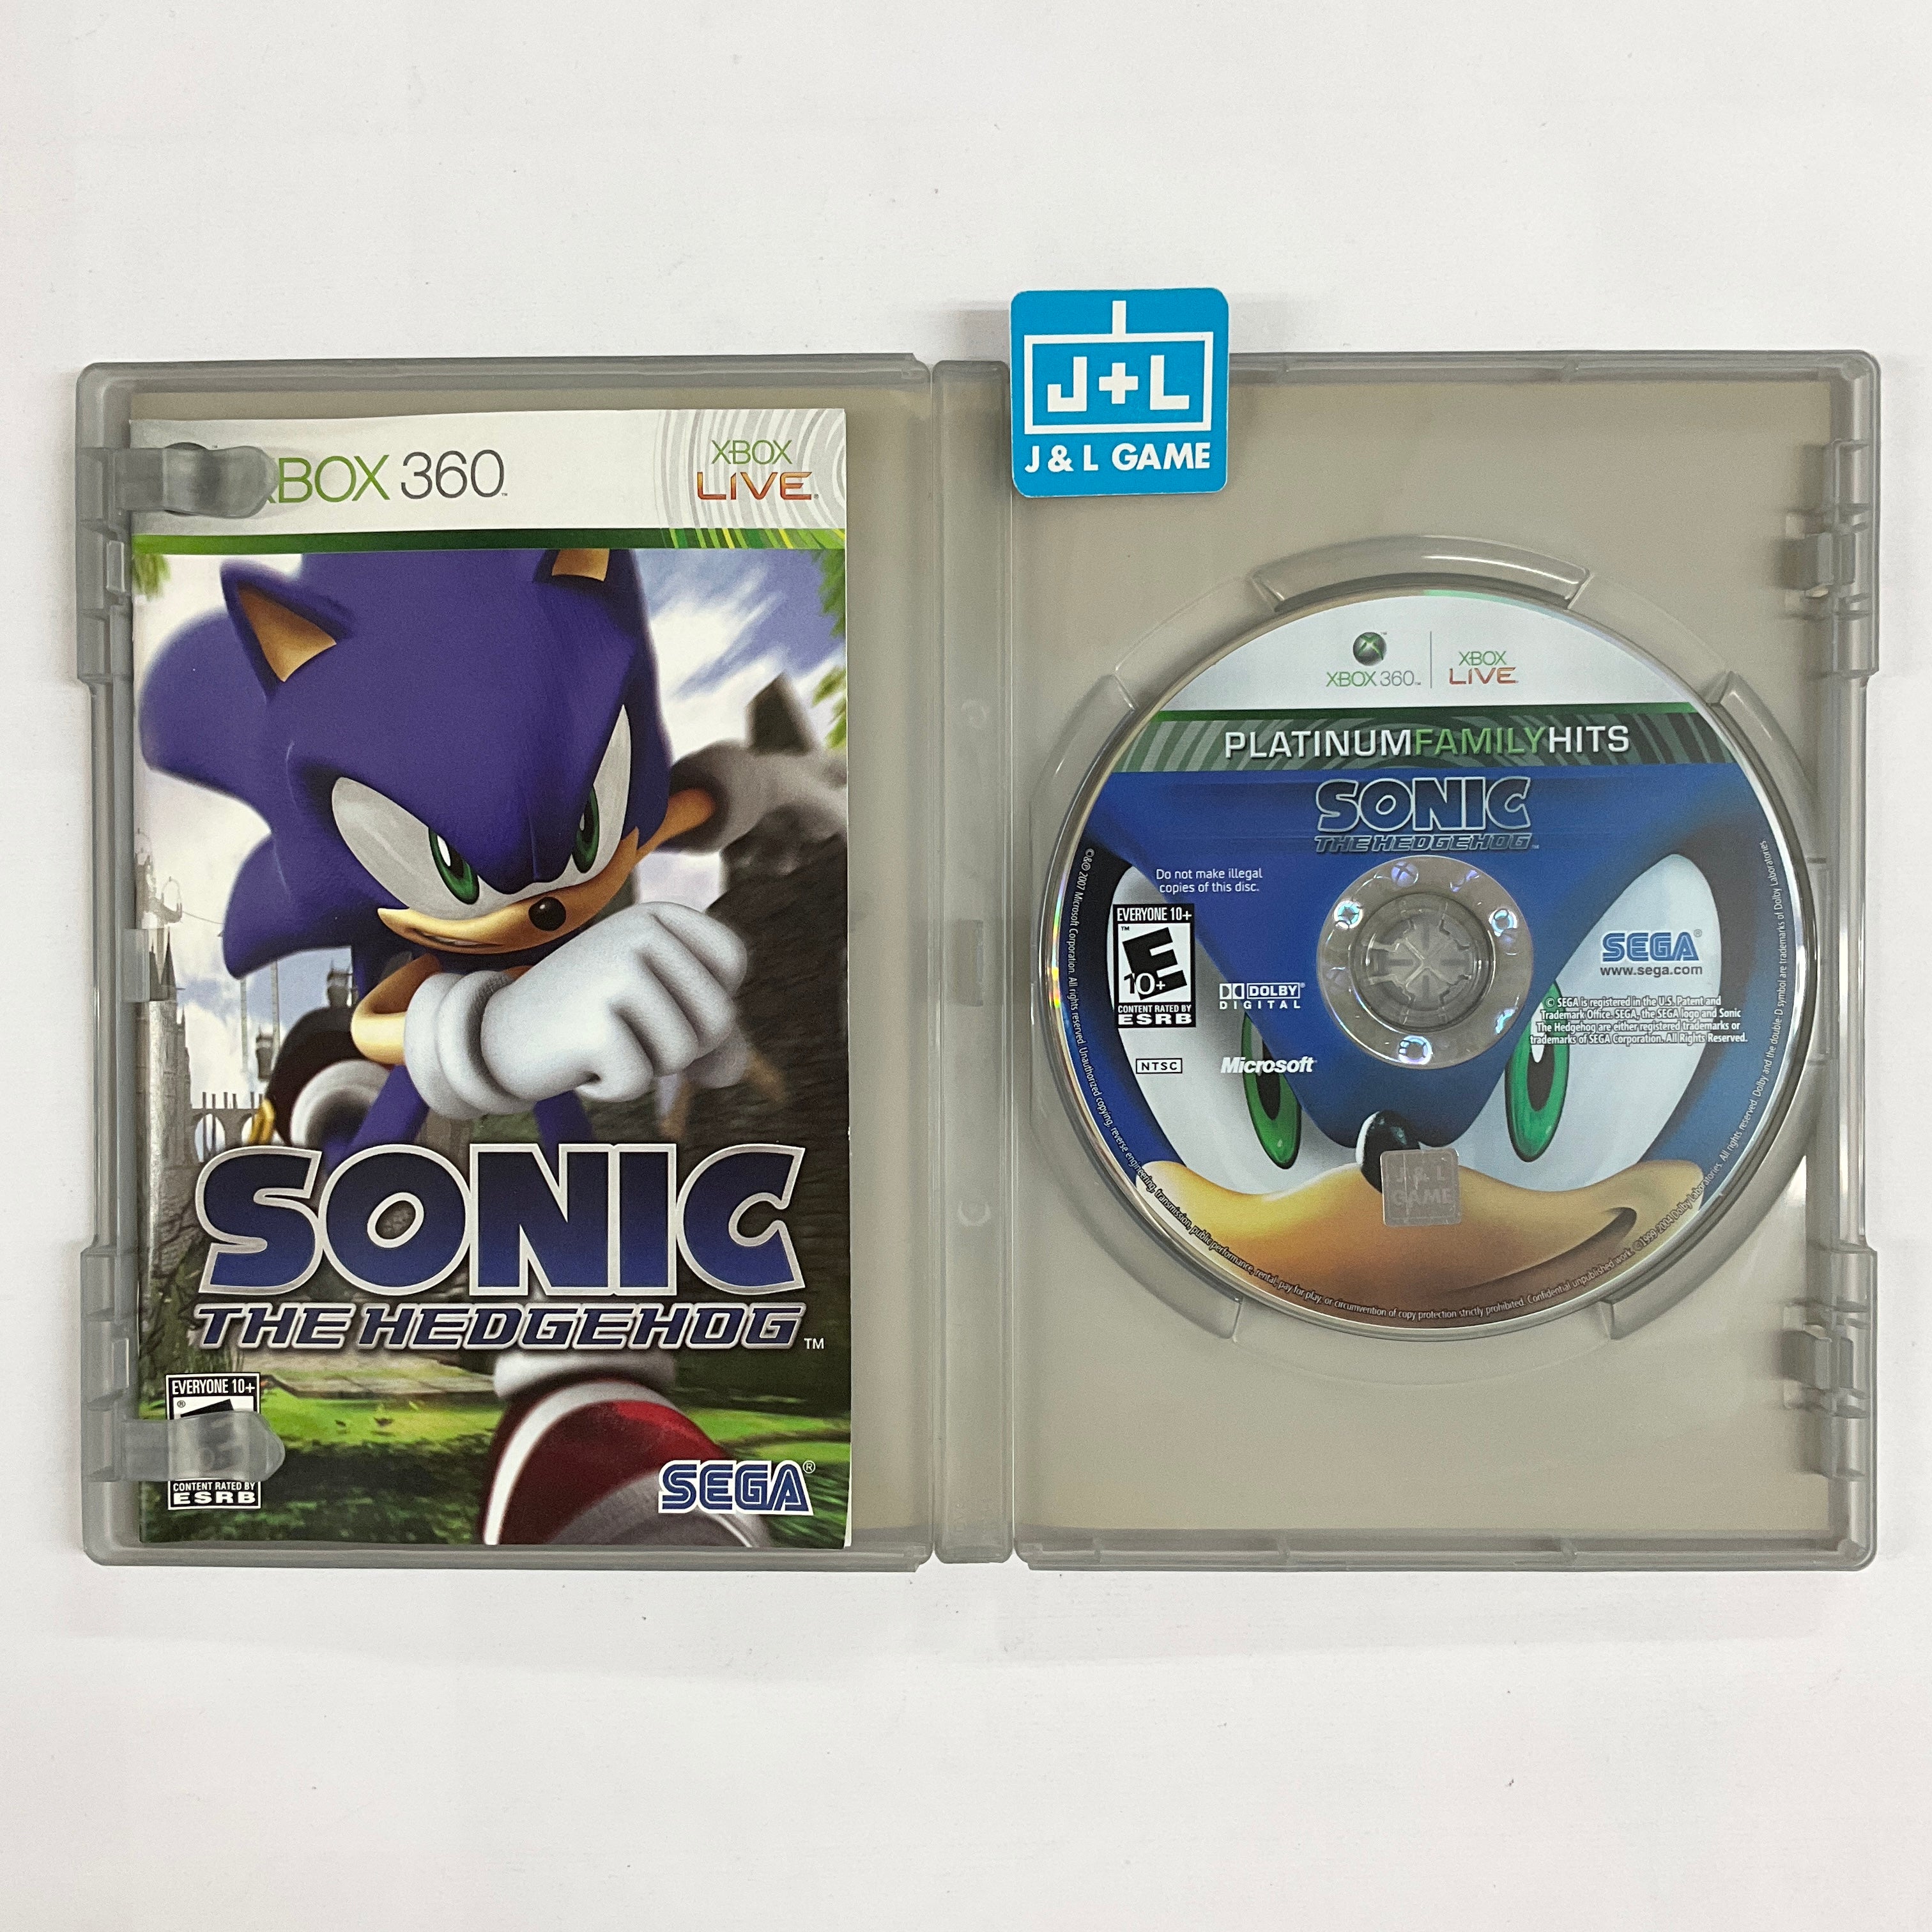 Sonic the Hedgehog (Platinum Family Hits) - Xbox 360 [Pre-Owned] Video Games Sega   